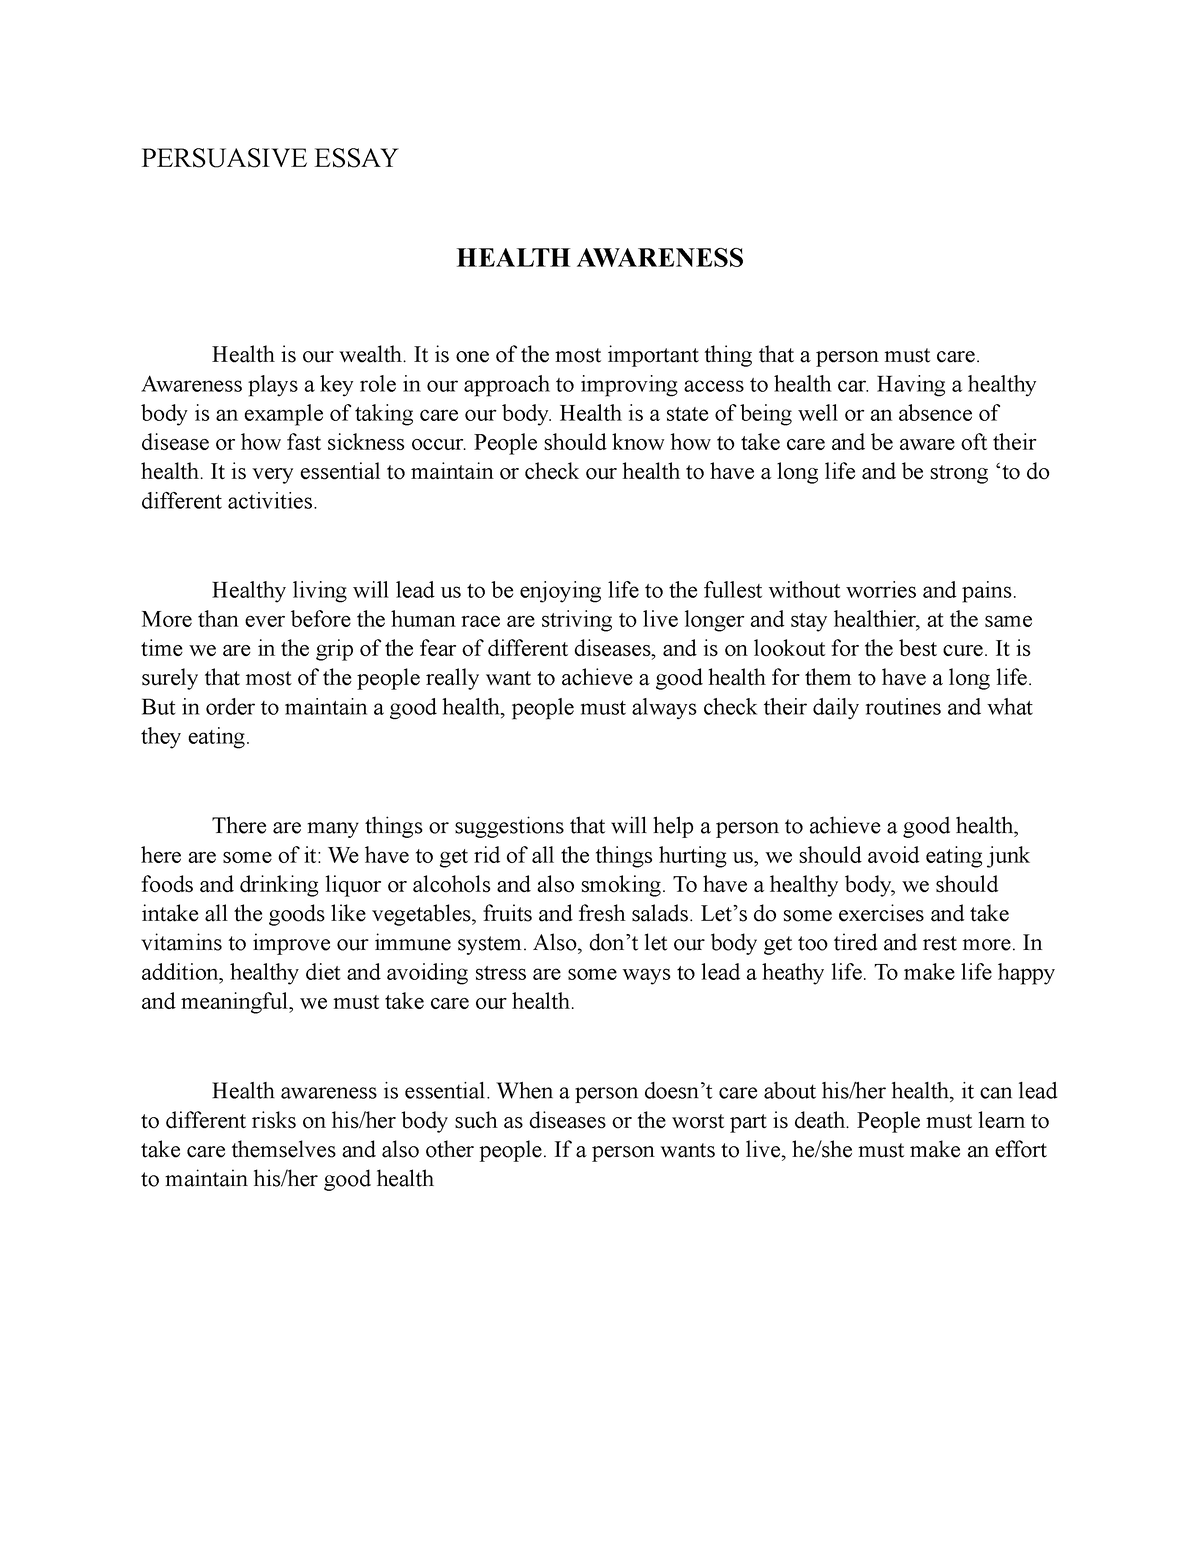 persuasive essay for health awareness